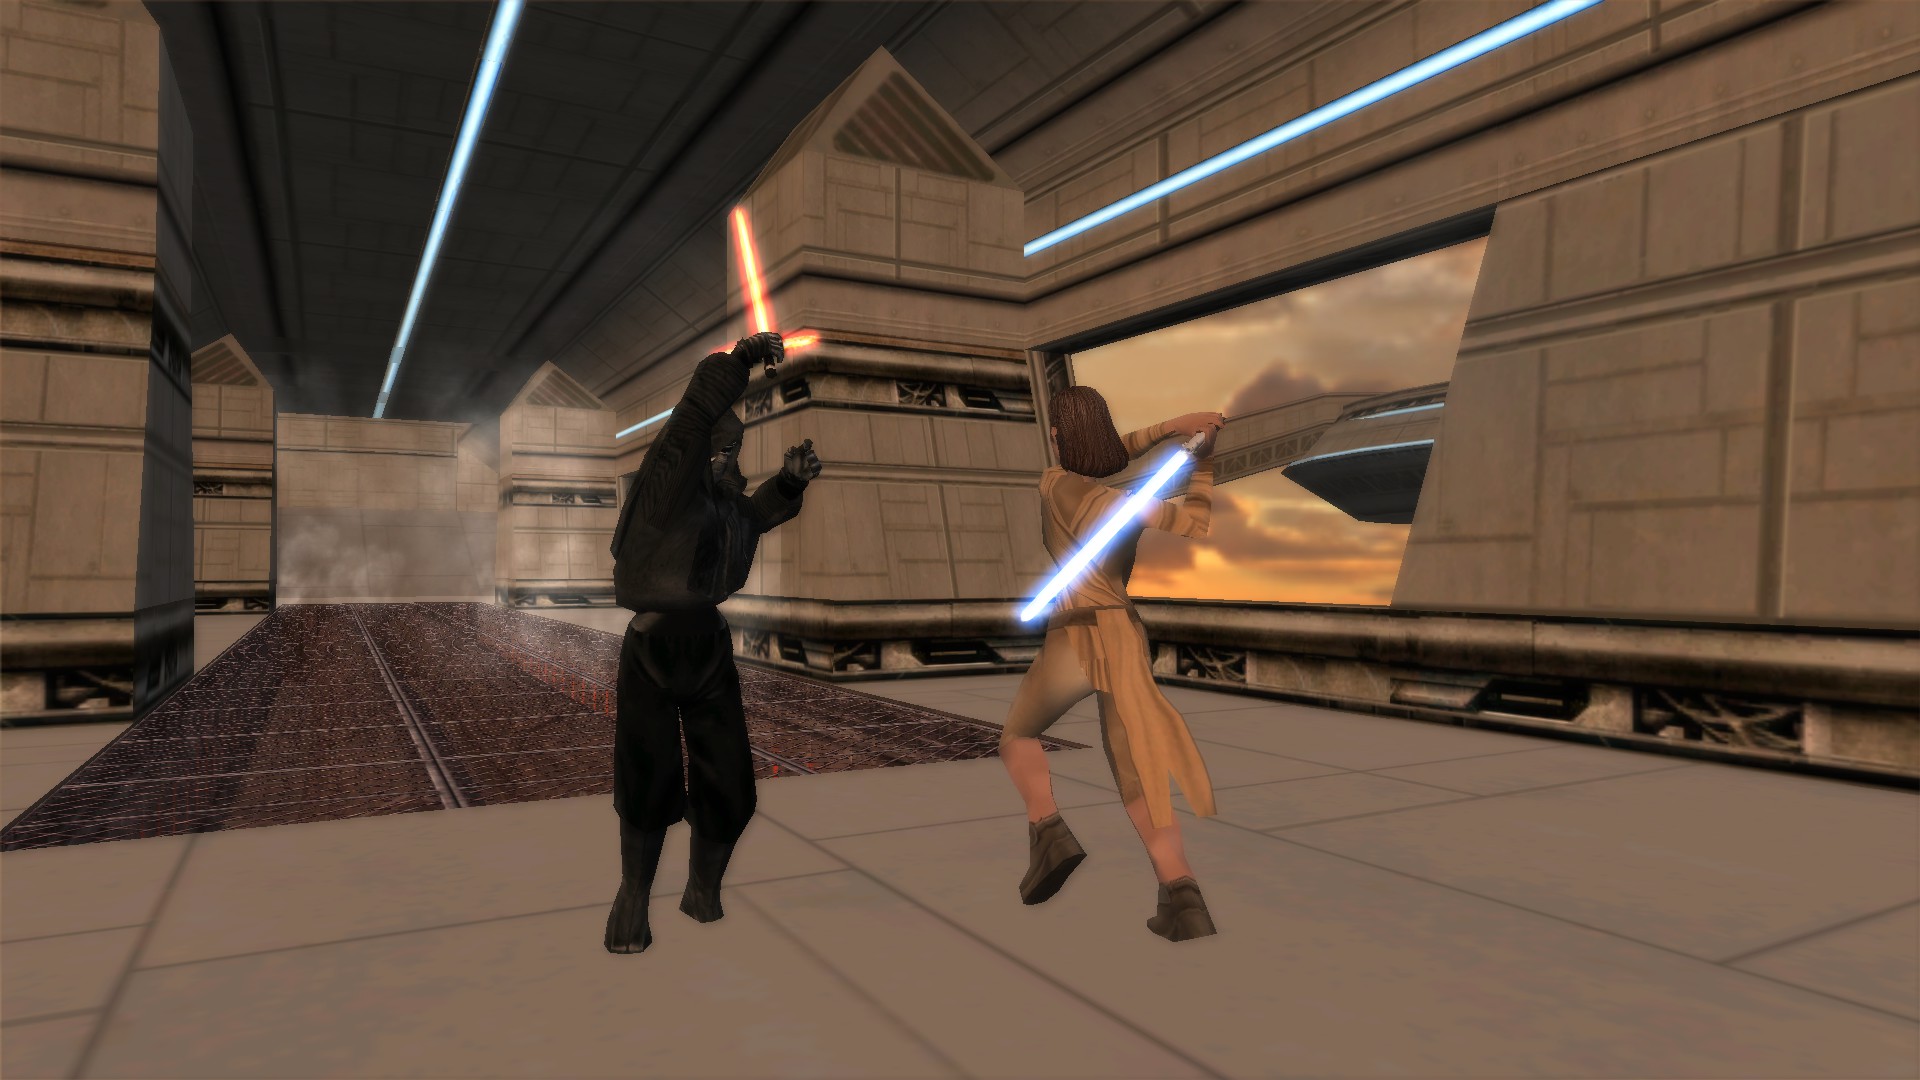 Image 28 - Galactic Civil War II mod for Star Wars Battlefront II.